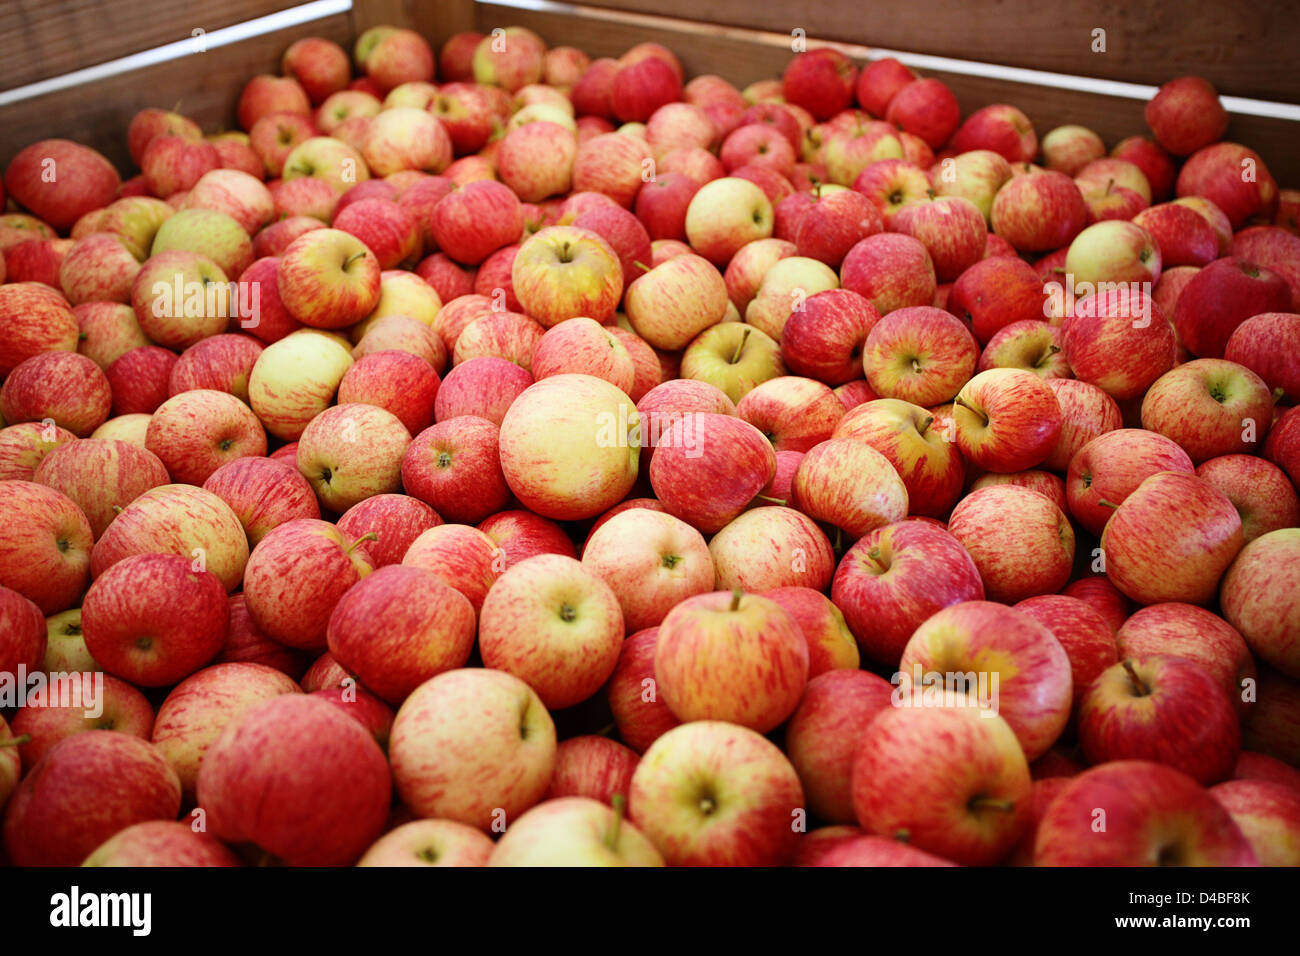 https://c8.alamy.com/comp/D4BF8K/a-huge-pile-of-harvested-south-african-pink-lady-apples-D4BF8K.jpg